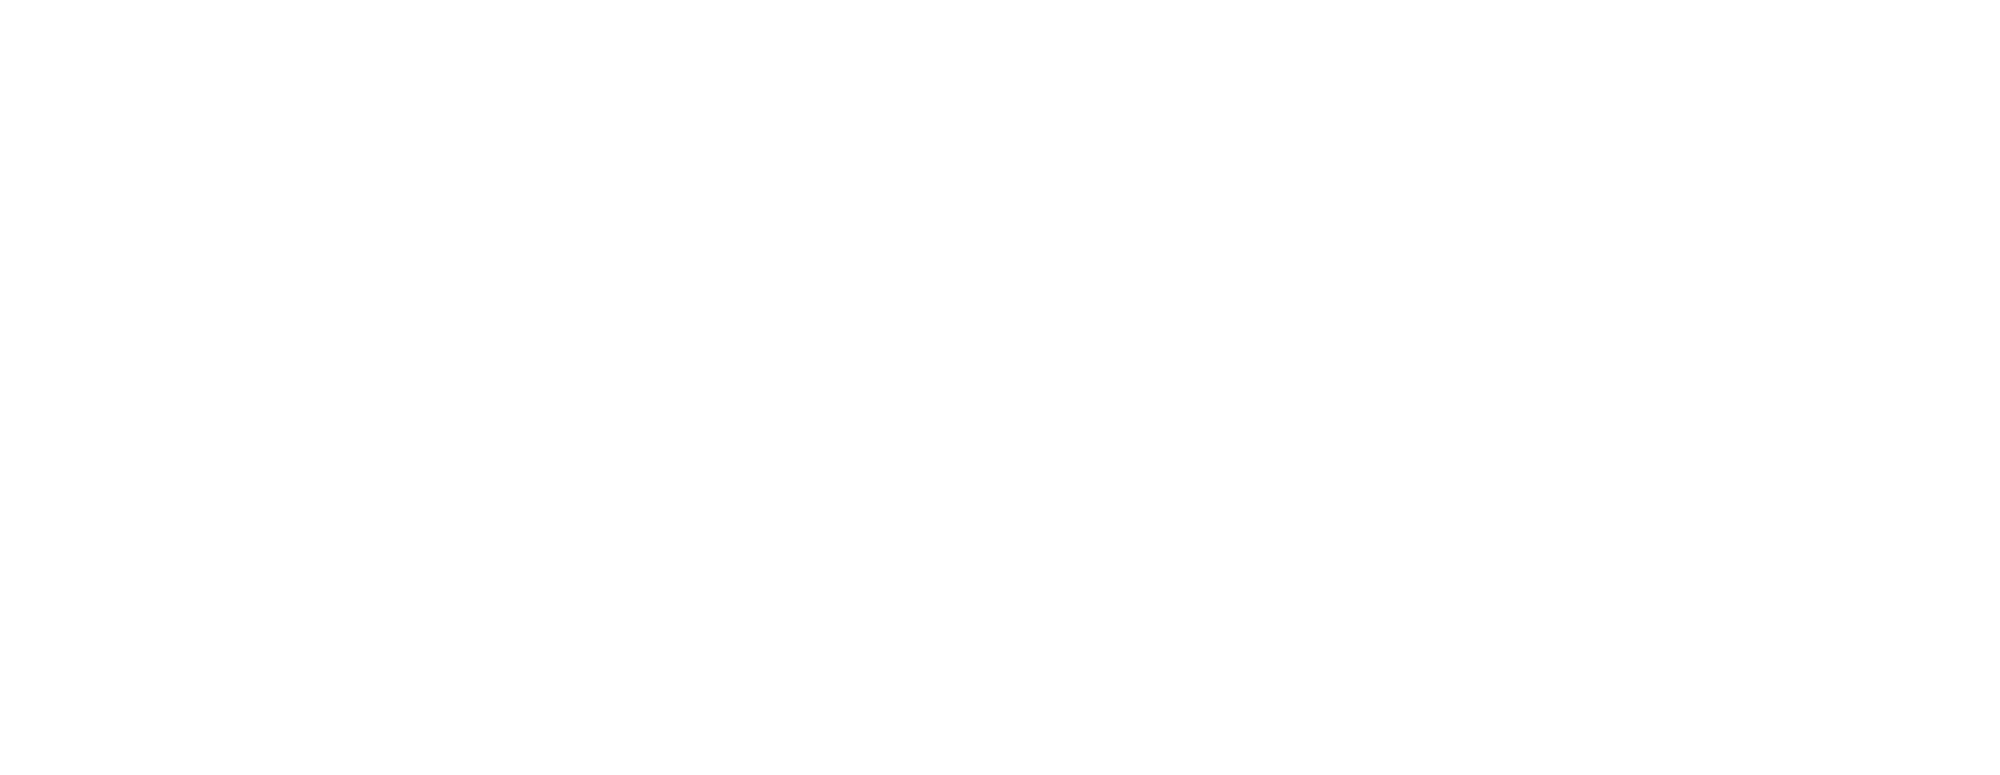 Help on The Way Tree Service